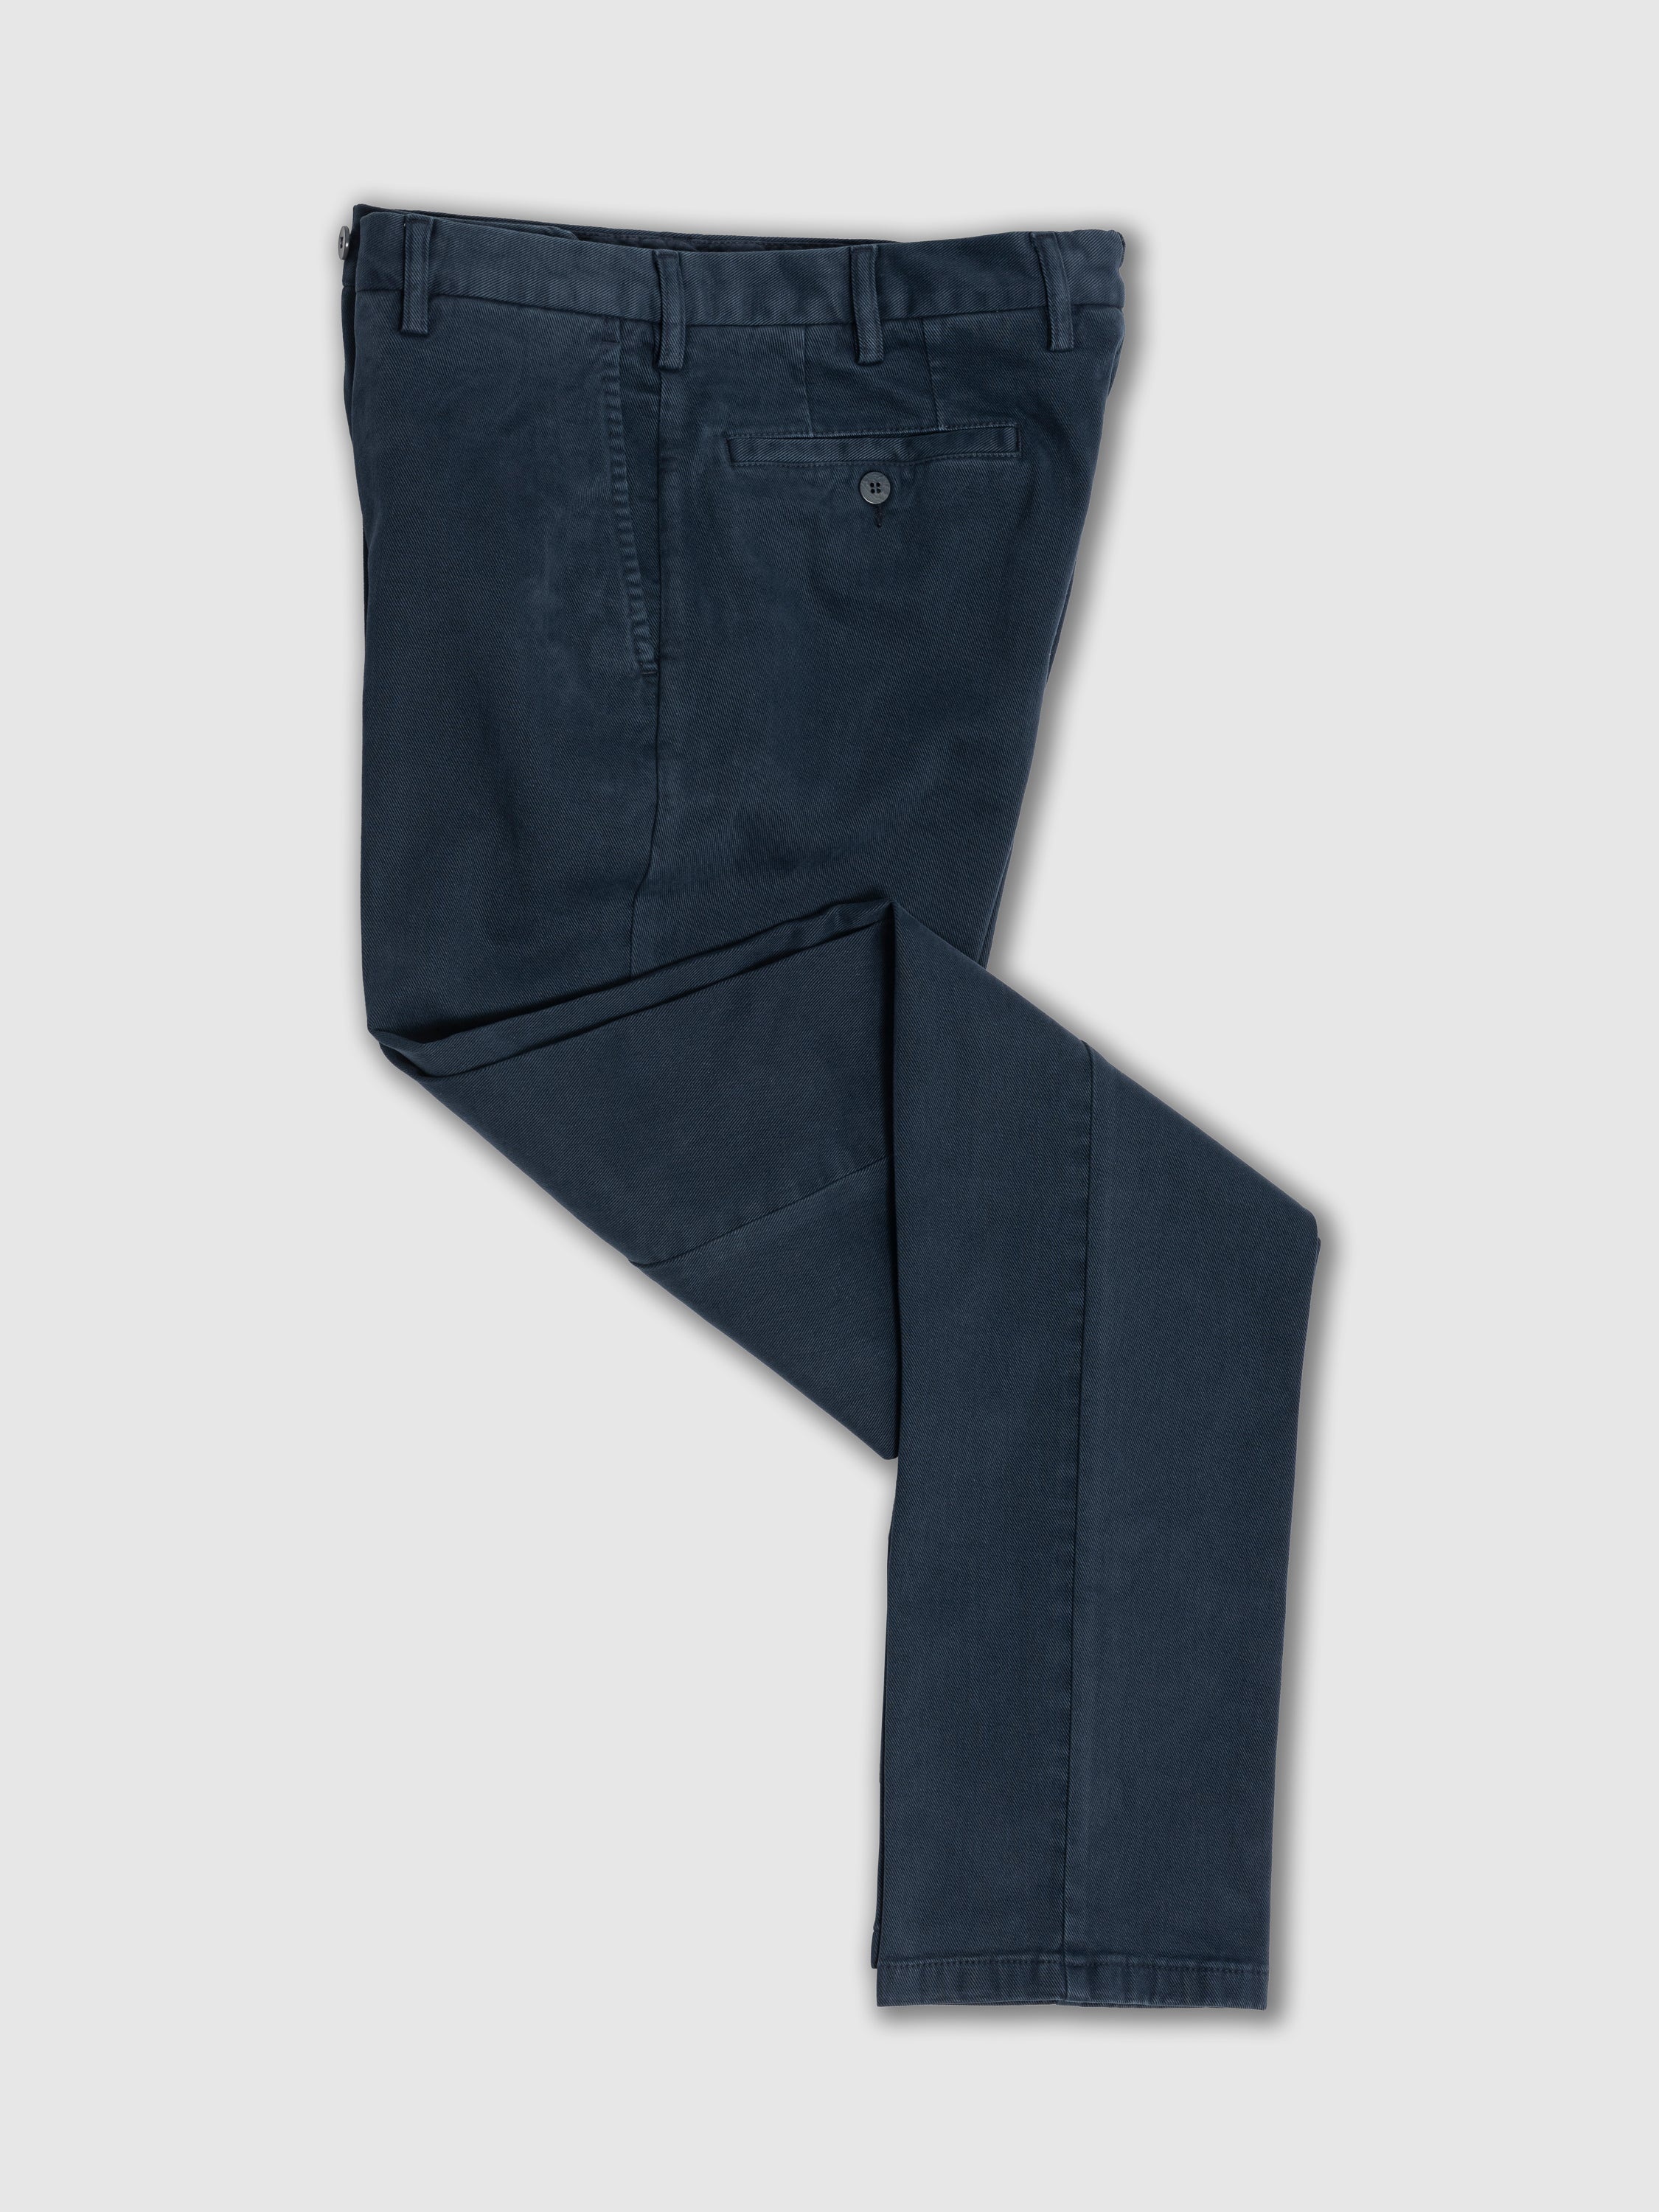 Van Heusen Trousers & Chinos, Van Heusen Dark Blue Trousers for Men at  Vanheusenindia.com